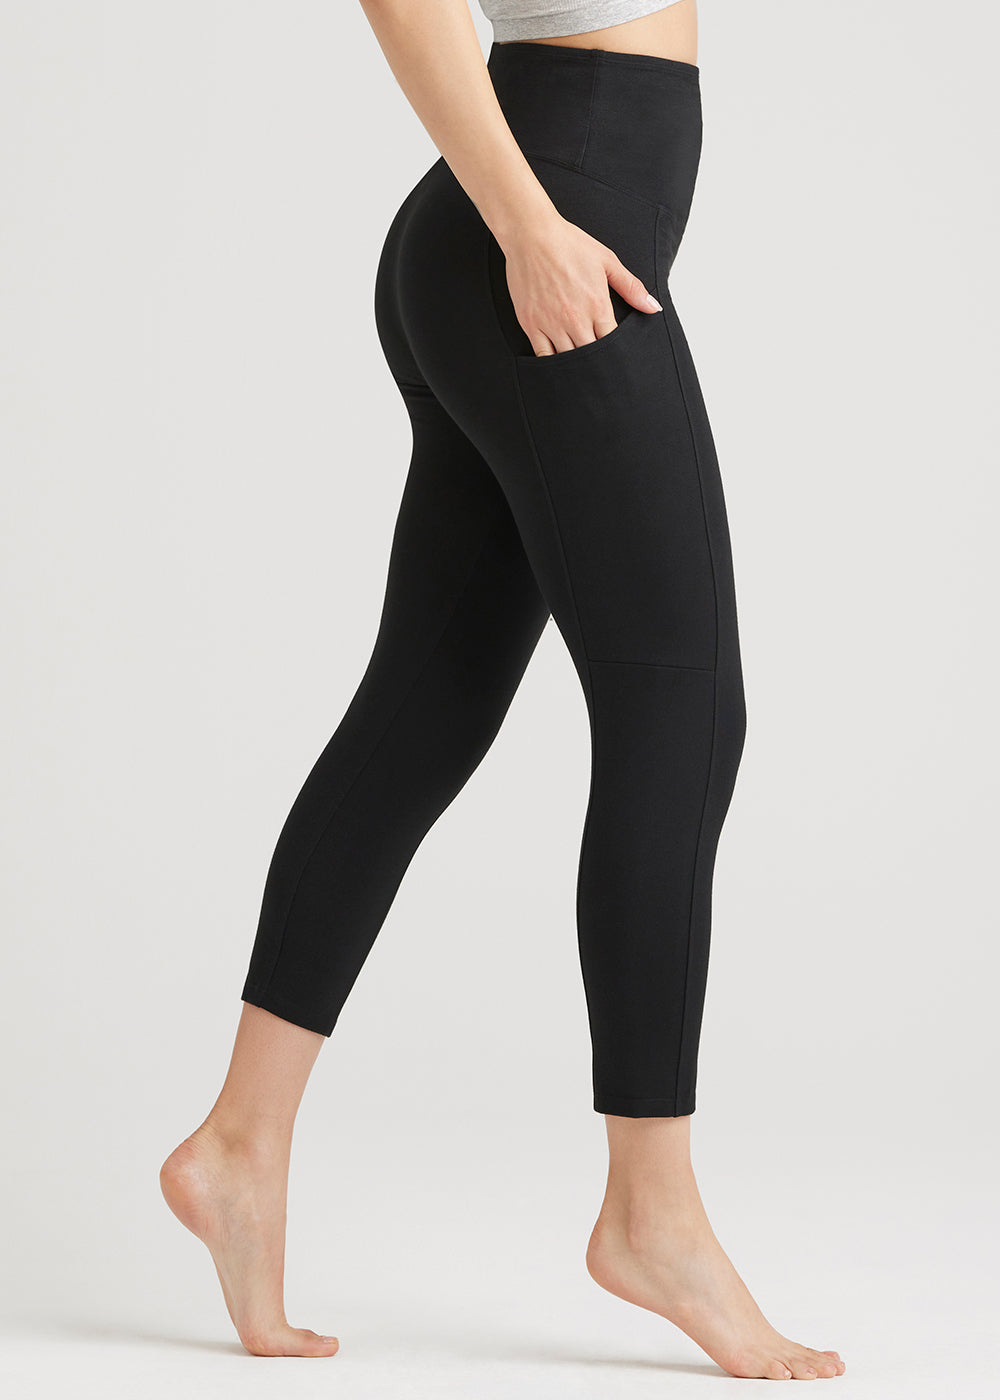 Jenni Cotton Stretch Leggings, Created for Macy's - Macy's